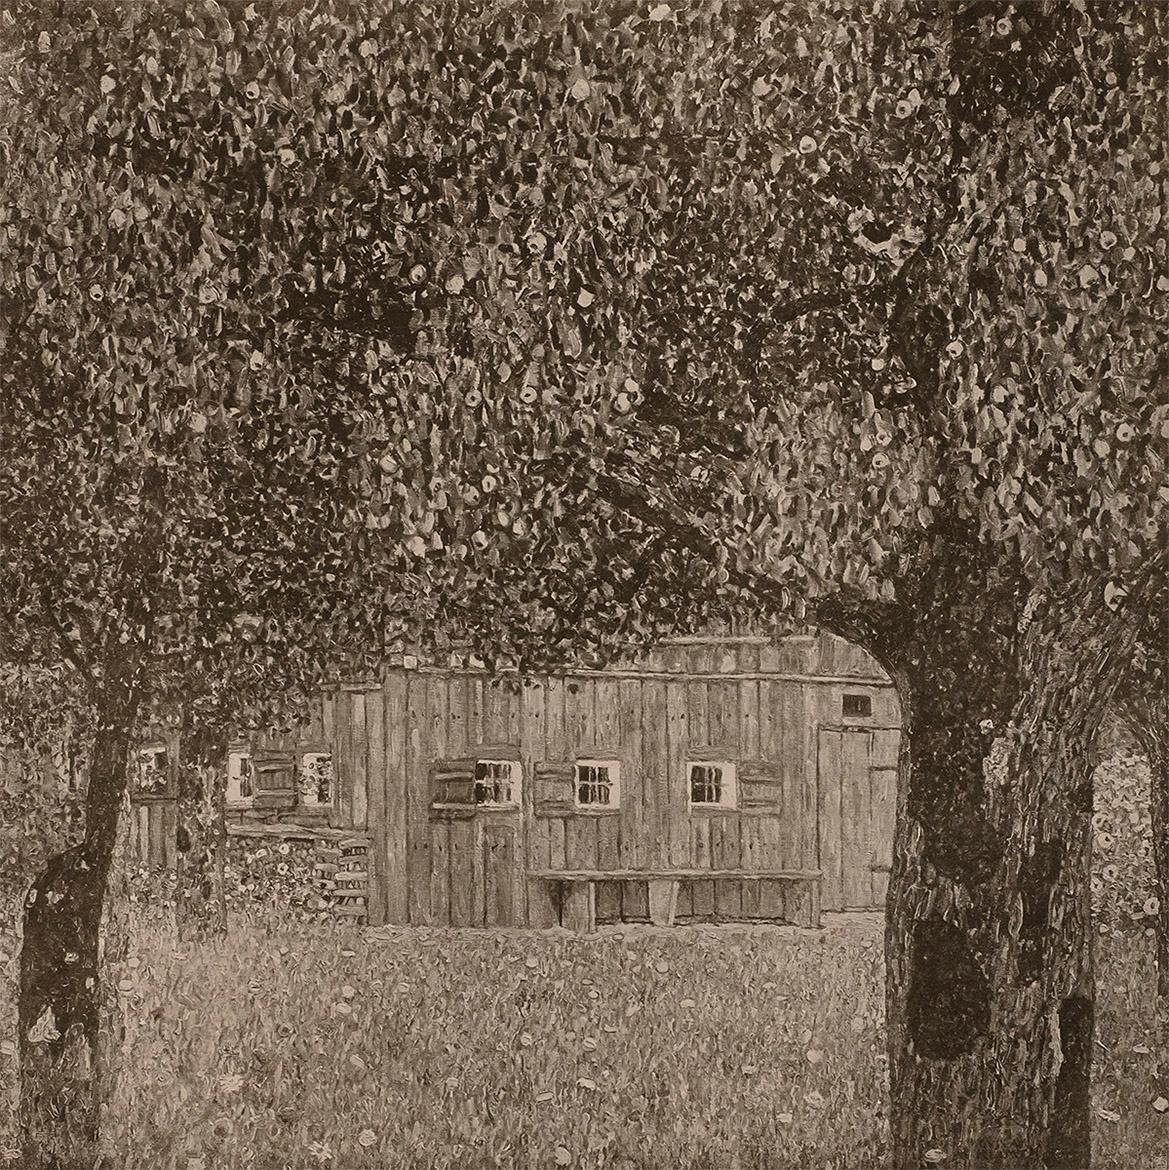 1912 farmhouse